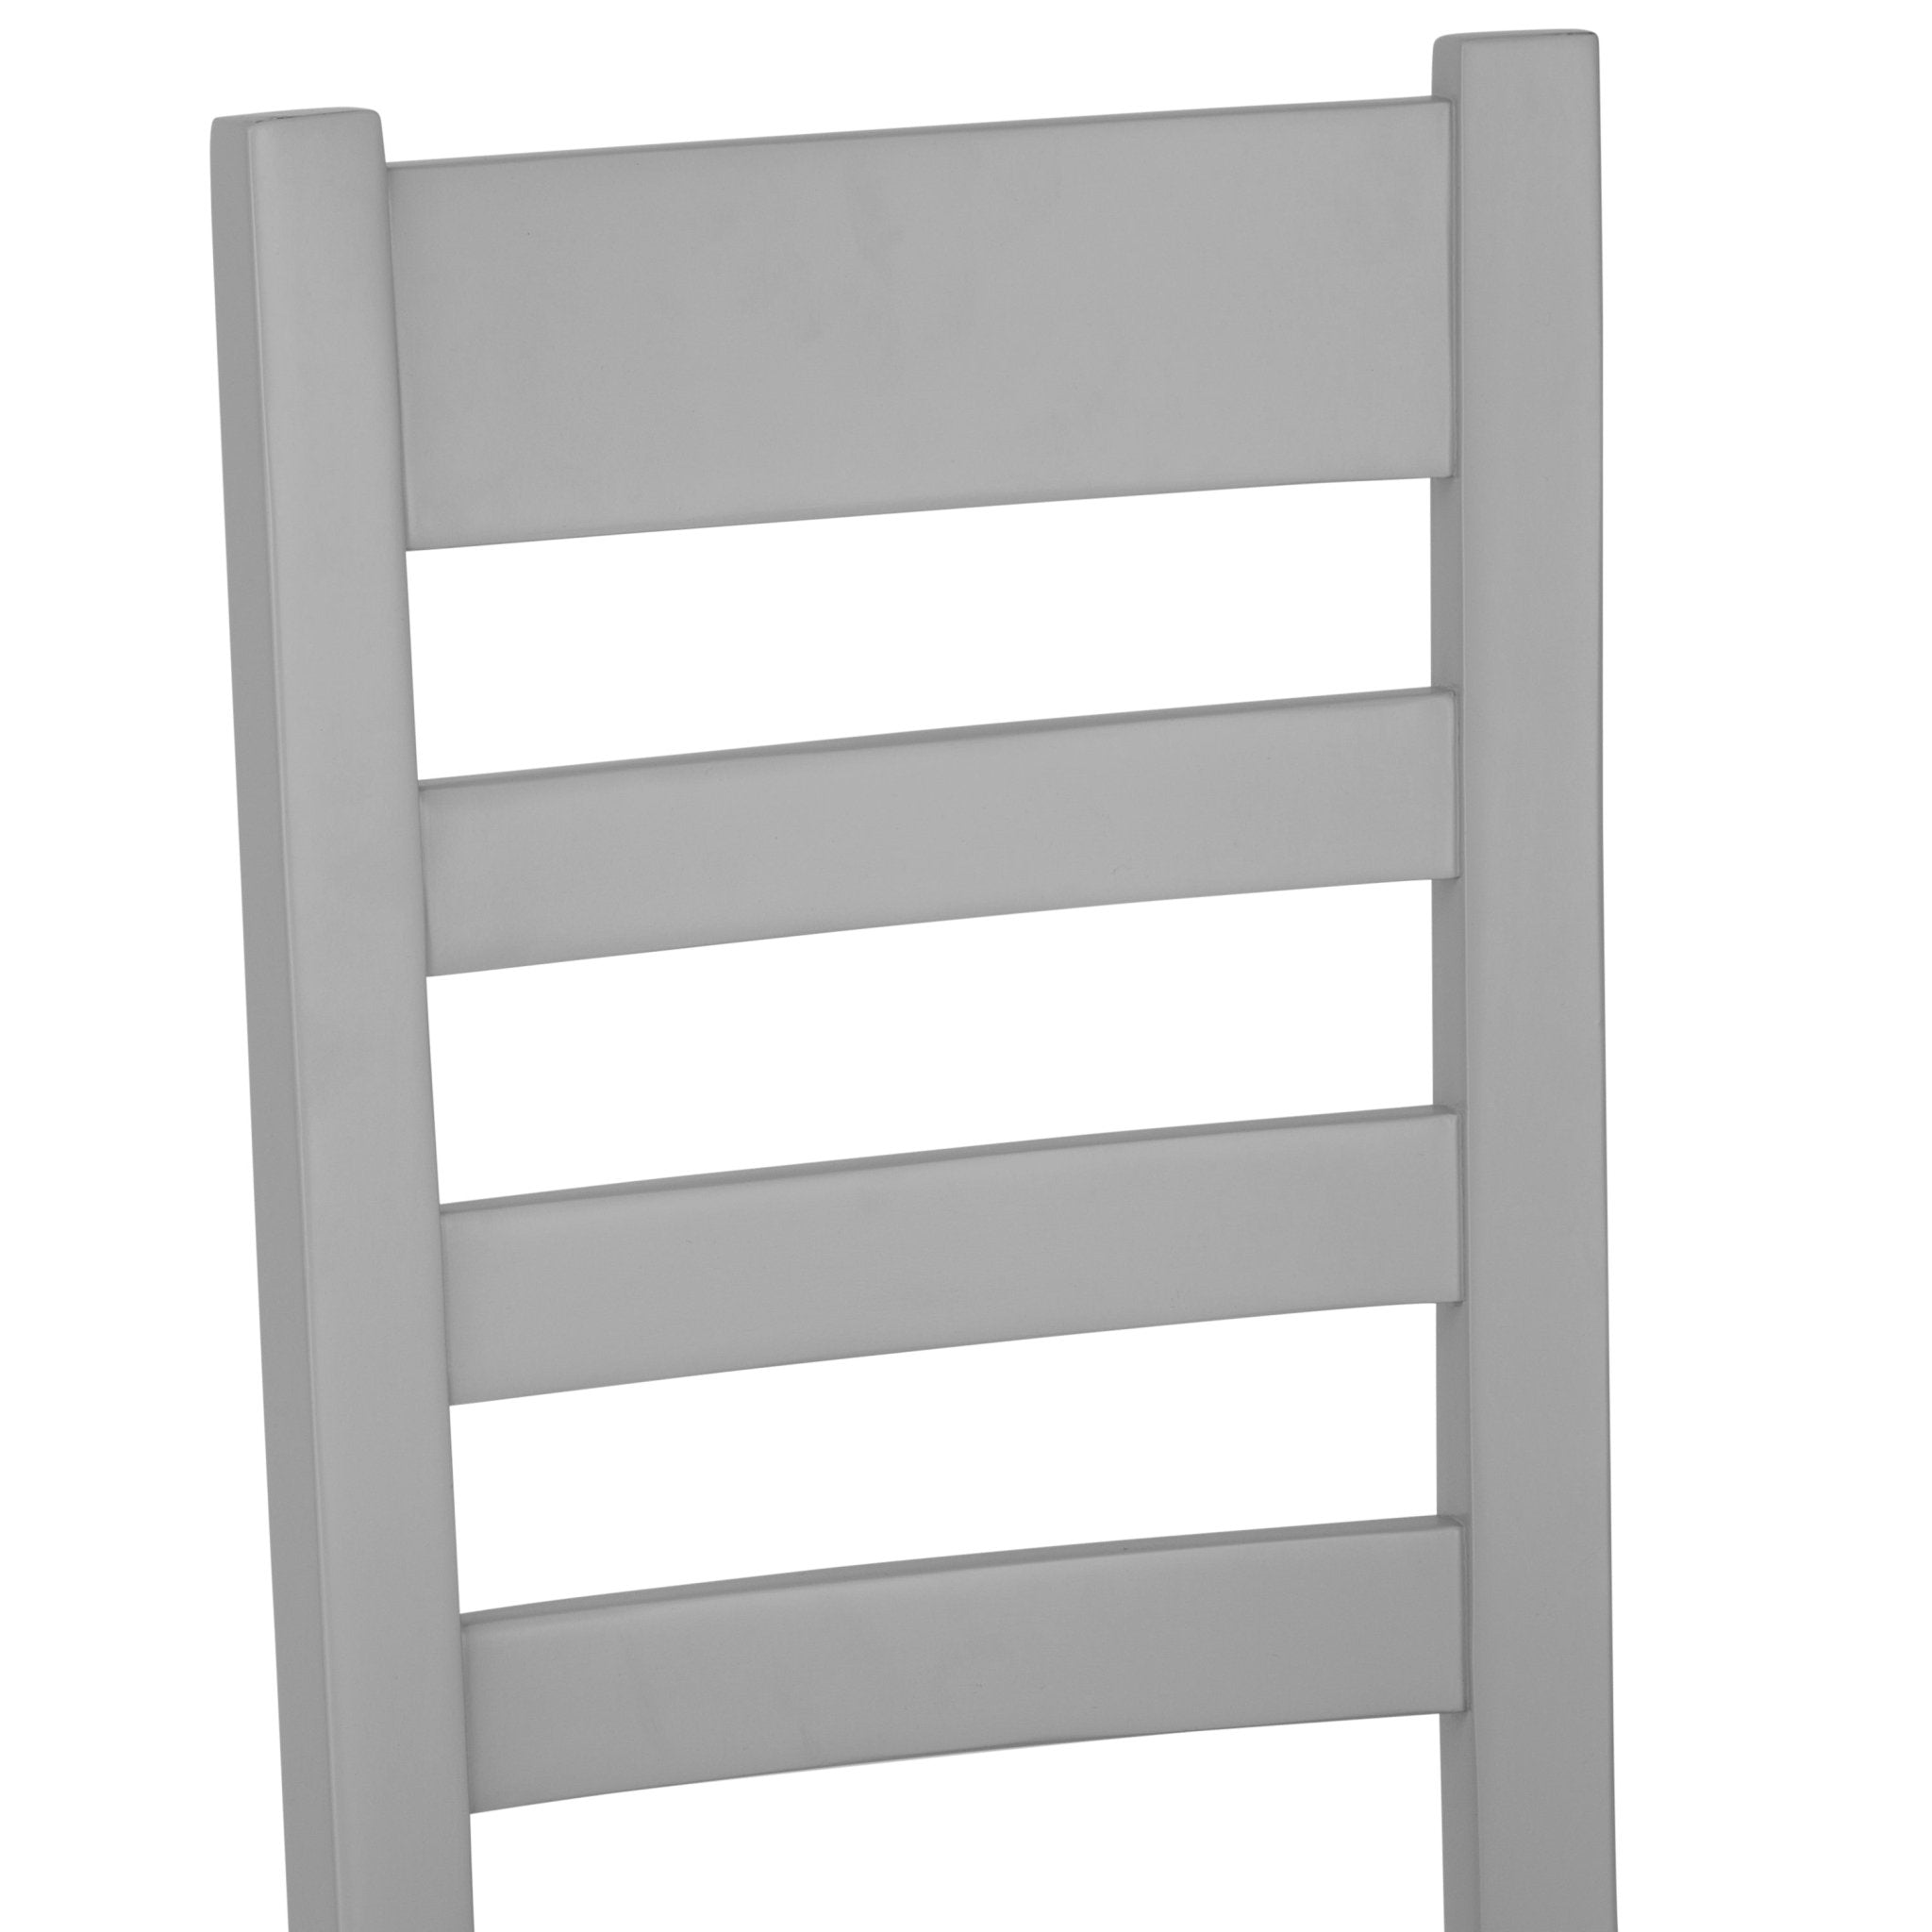 Loxhill Grey Ladder Back Chair Wooden Seat - Duck Barn Interiors